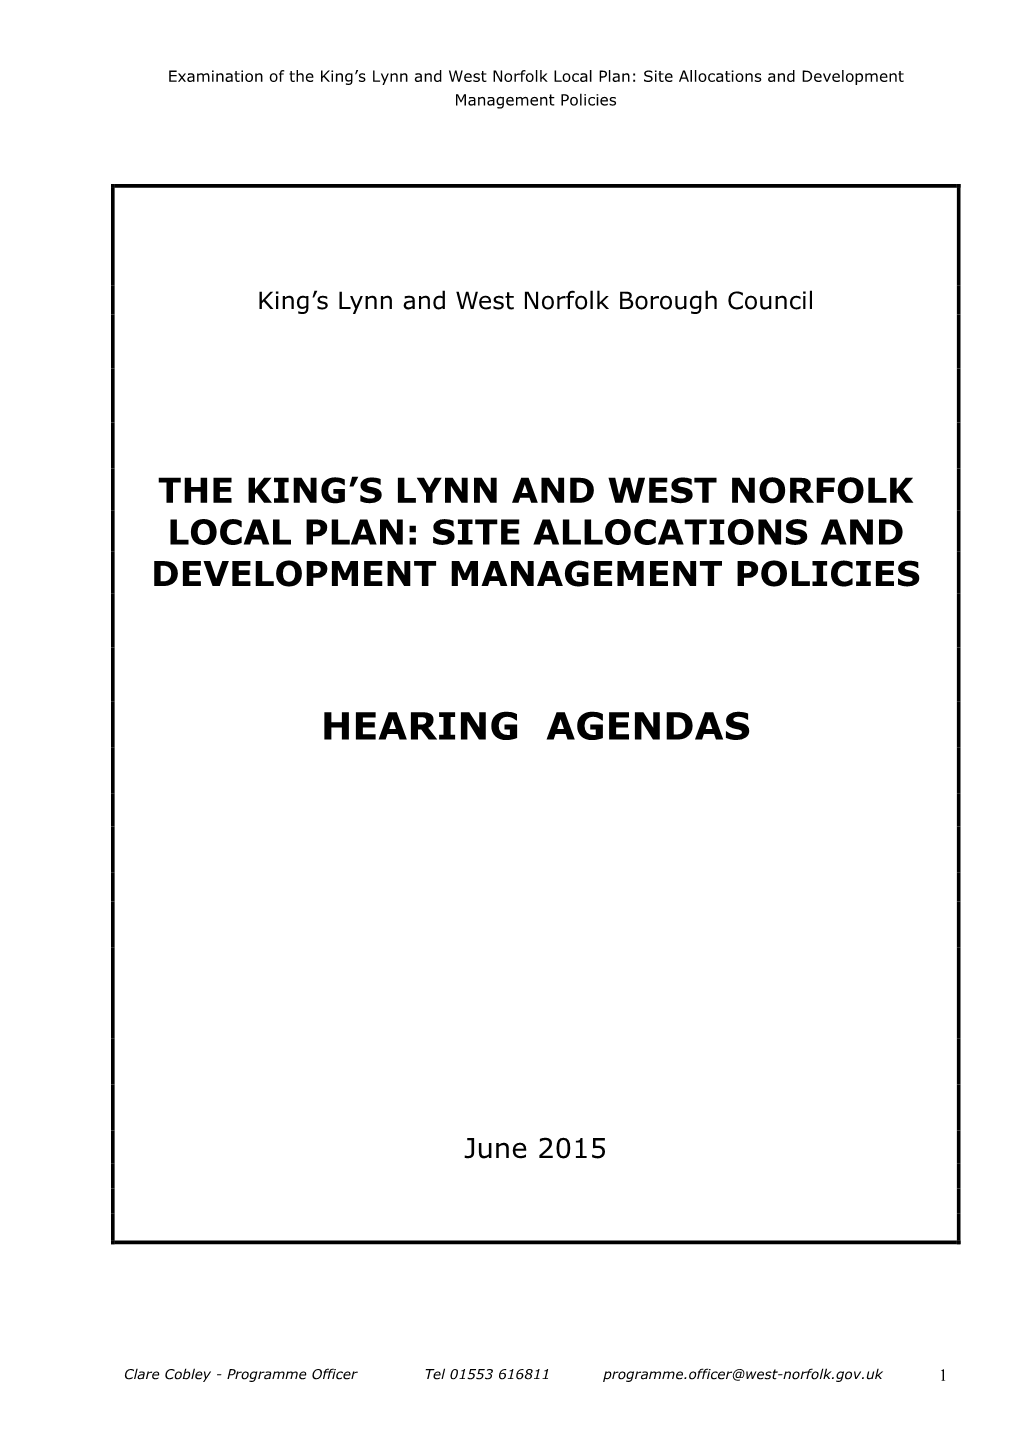 Hearing Agendas June 2015